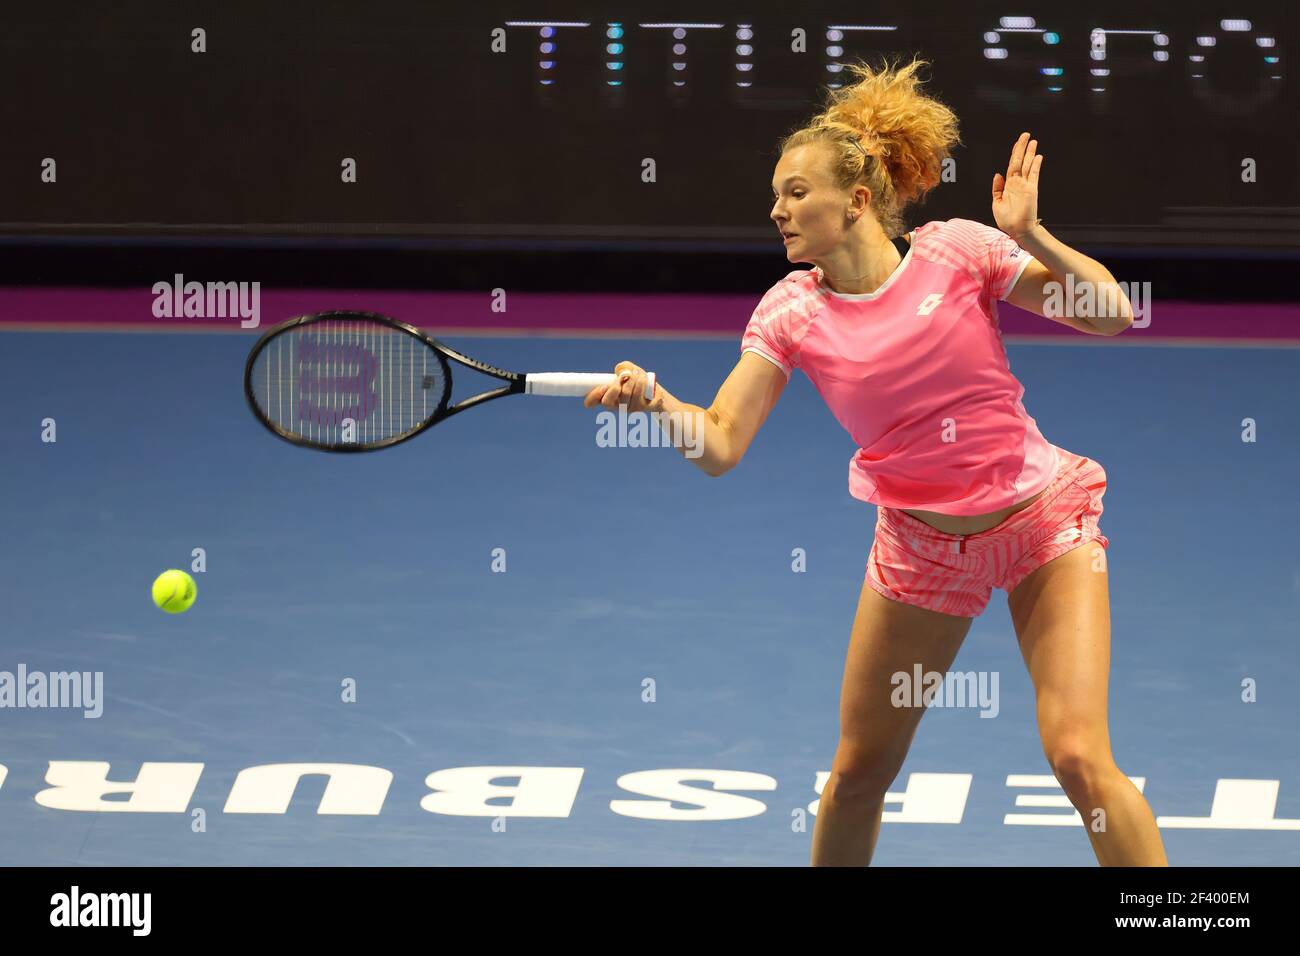 Katerina Siniakova of Czech Republic playing against Margarita Gasparyan of Russia during the St.Petersburg Ladies Trophy 2021 tennis tournament at Sibur Arena